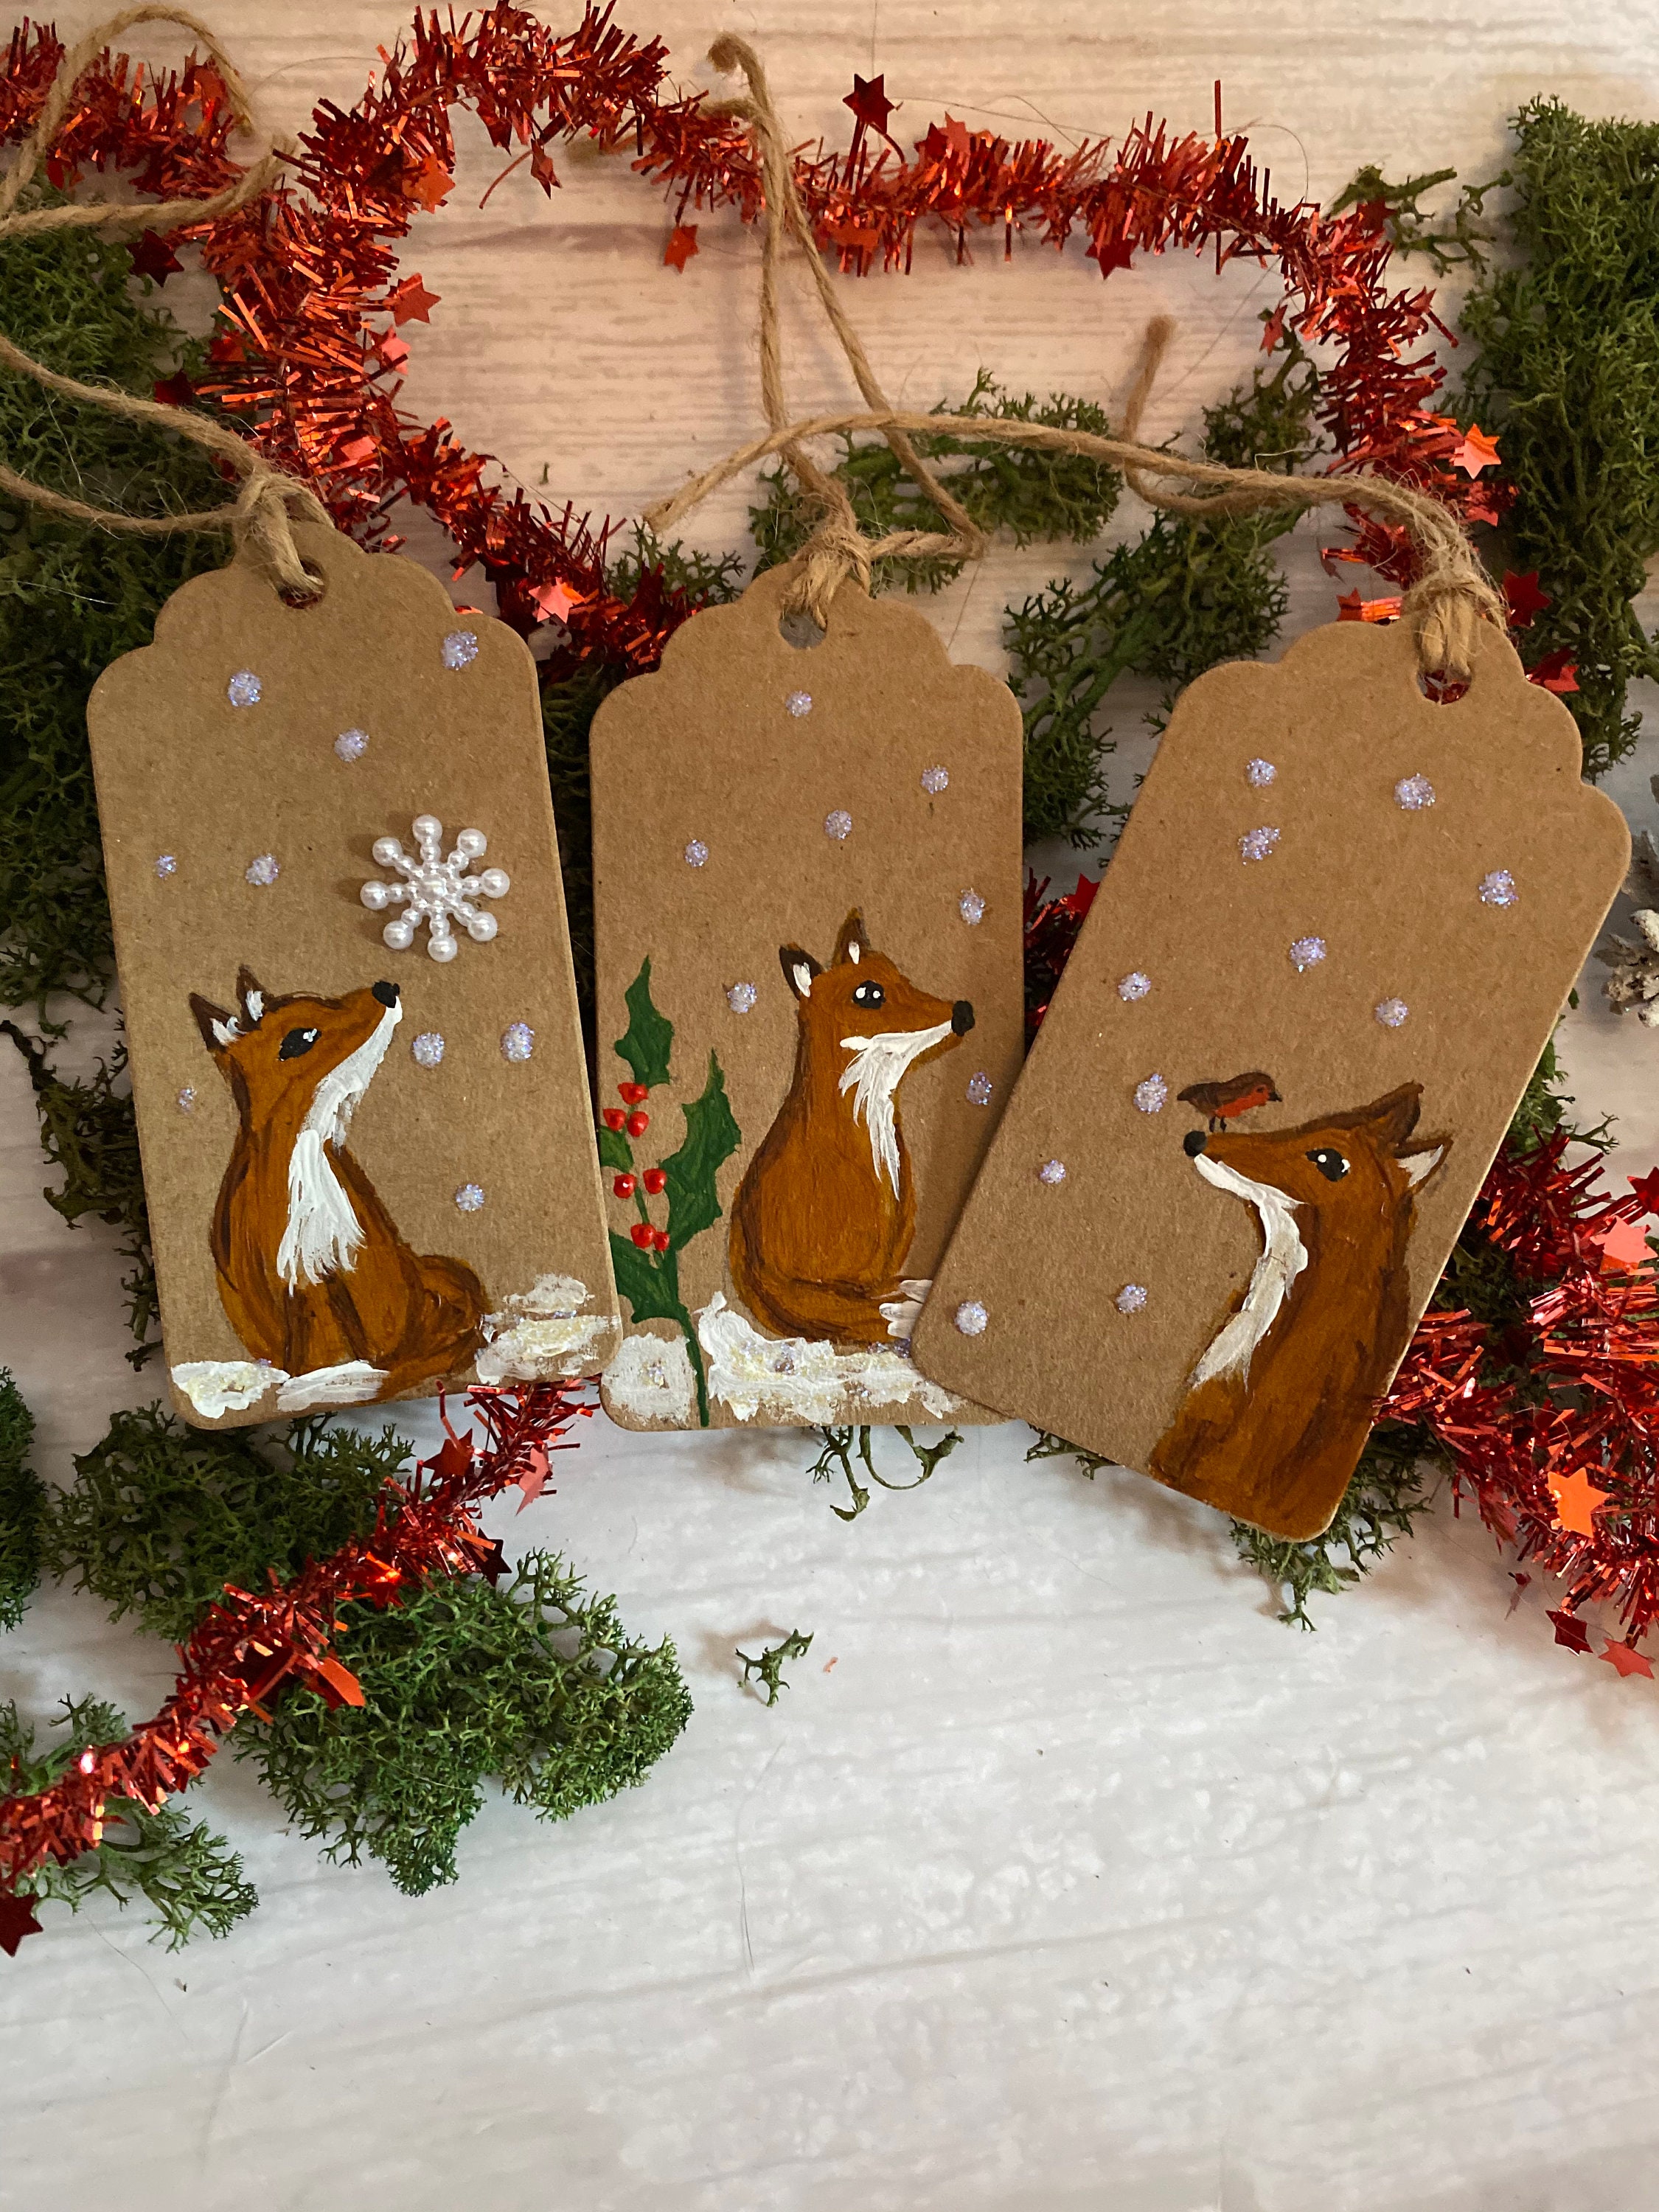 Set of 5 Handmade Christmas Gift Tags Snowman Tag Present Tag Xmas